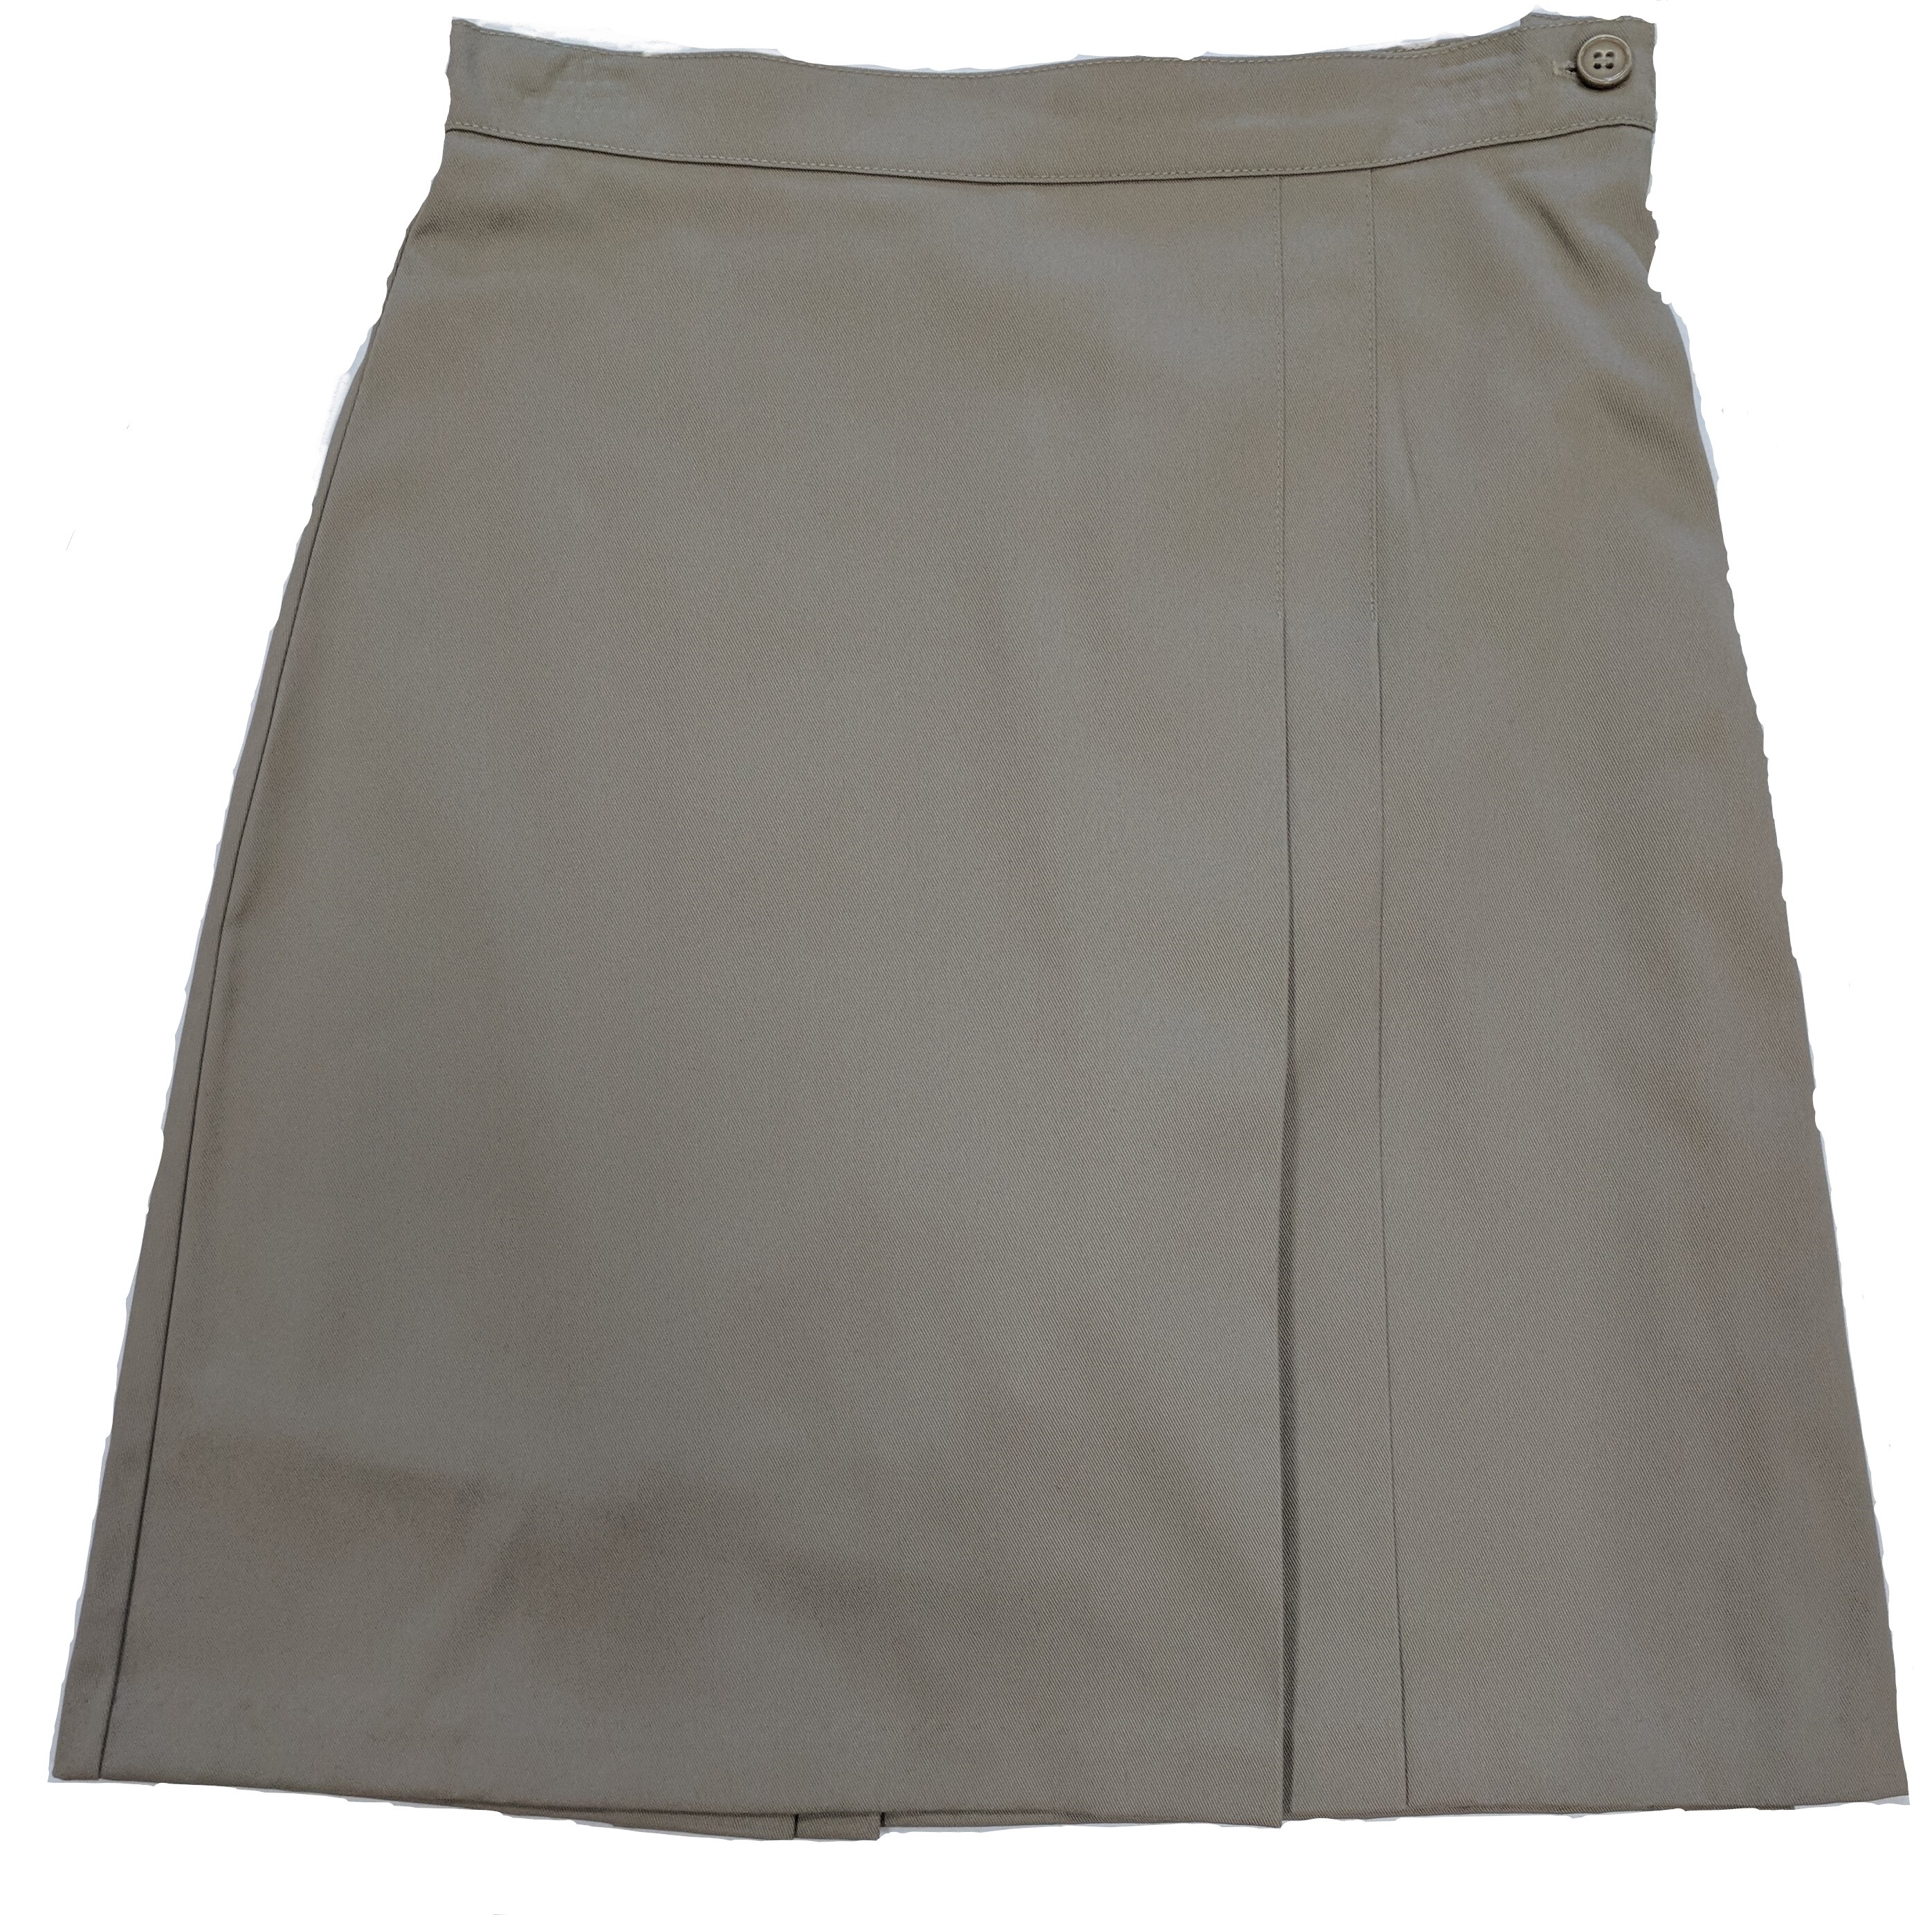 ESA-Girl's Khaki skort - Junior size